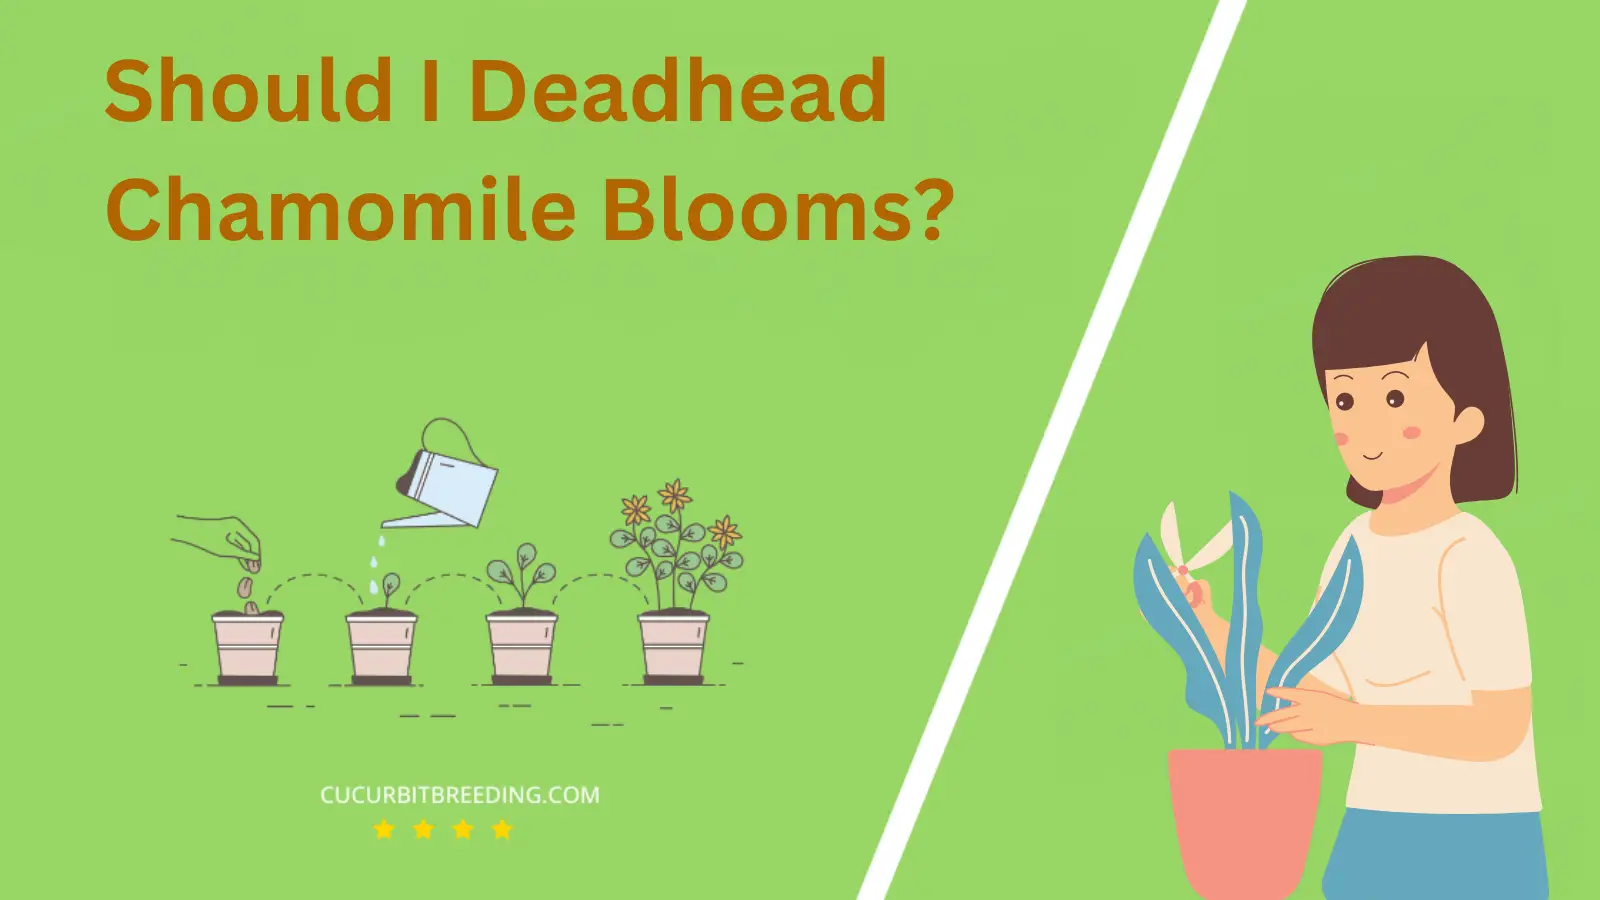 Should I Deadhead Chamomile Blooms?